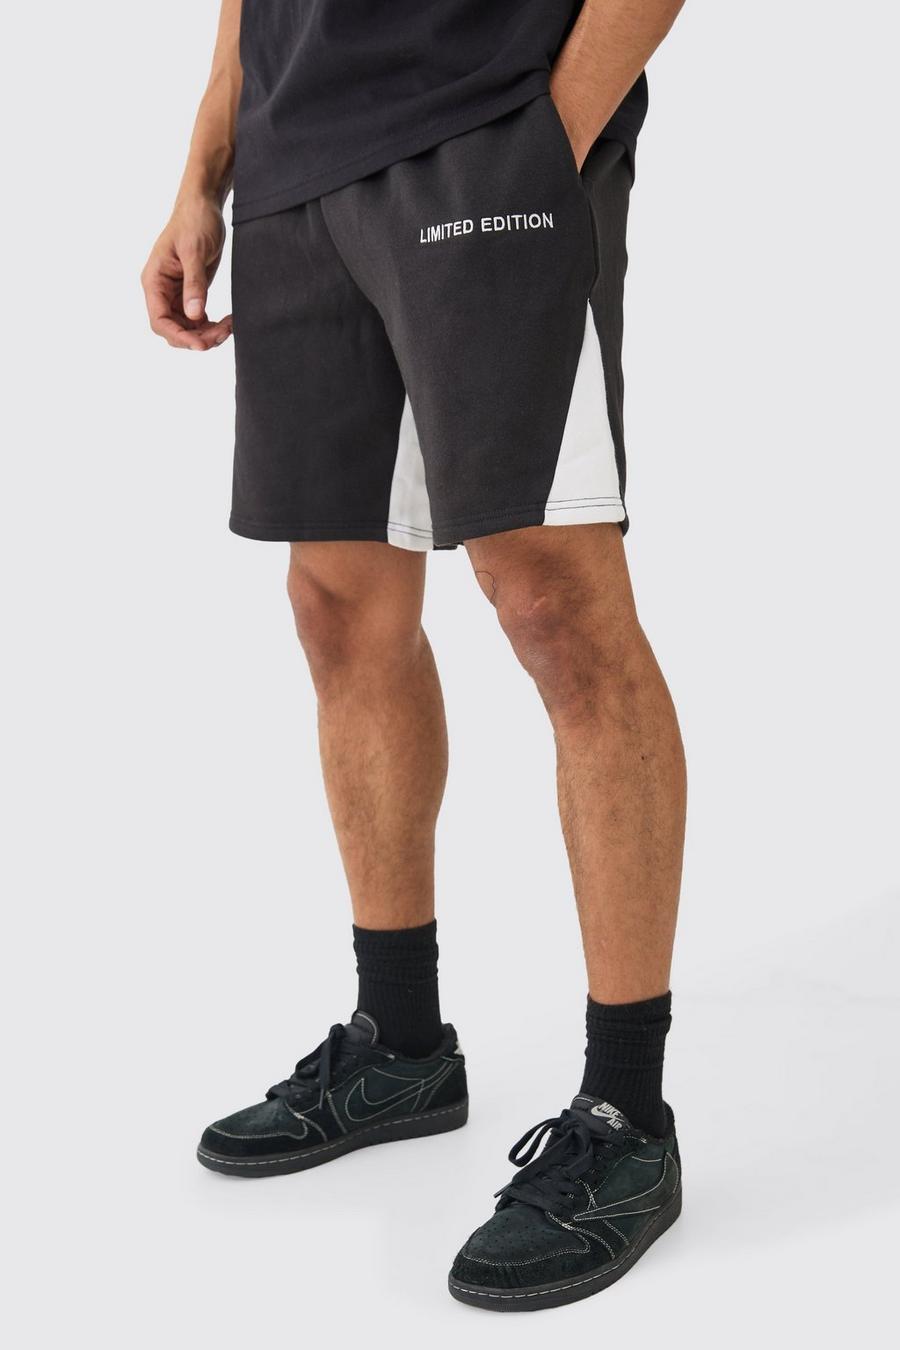 Lockere Limited Edition Shorts, Black